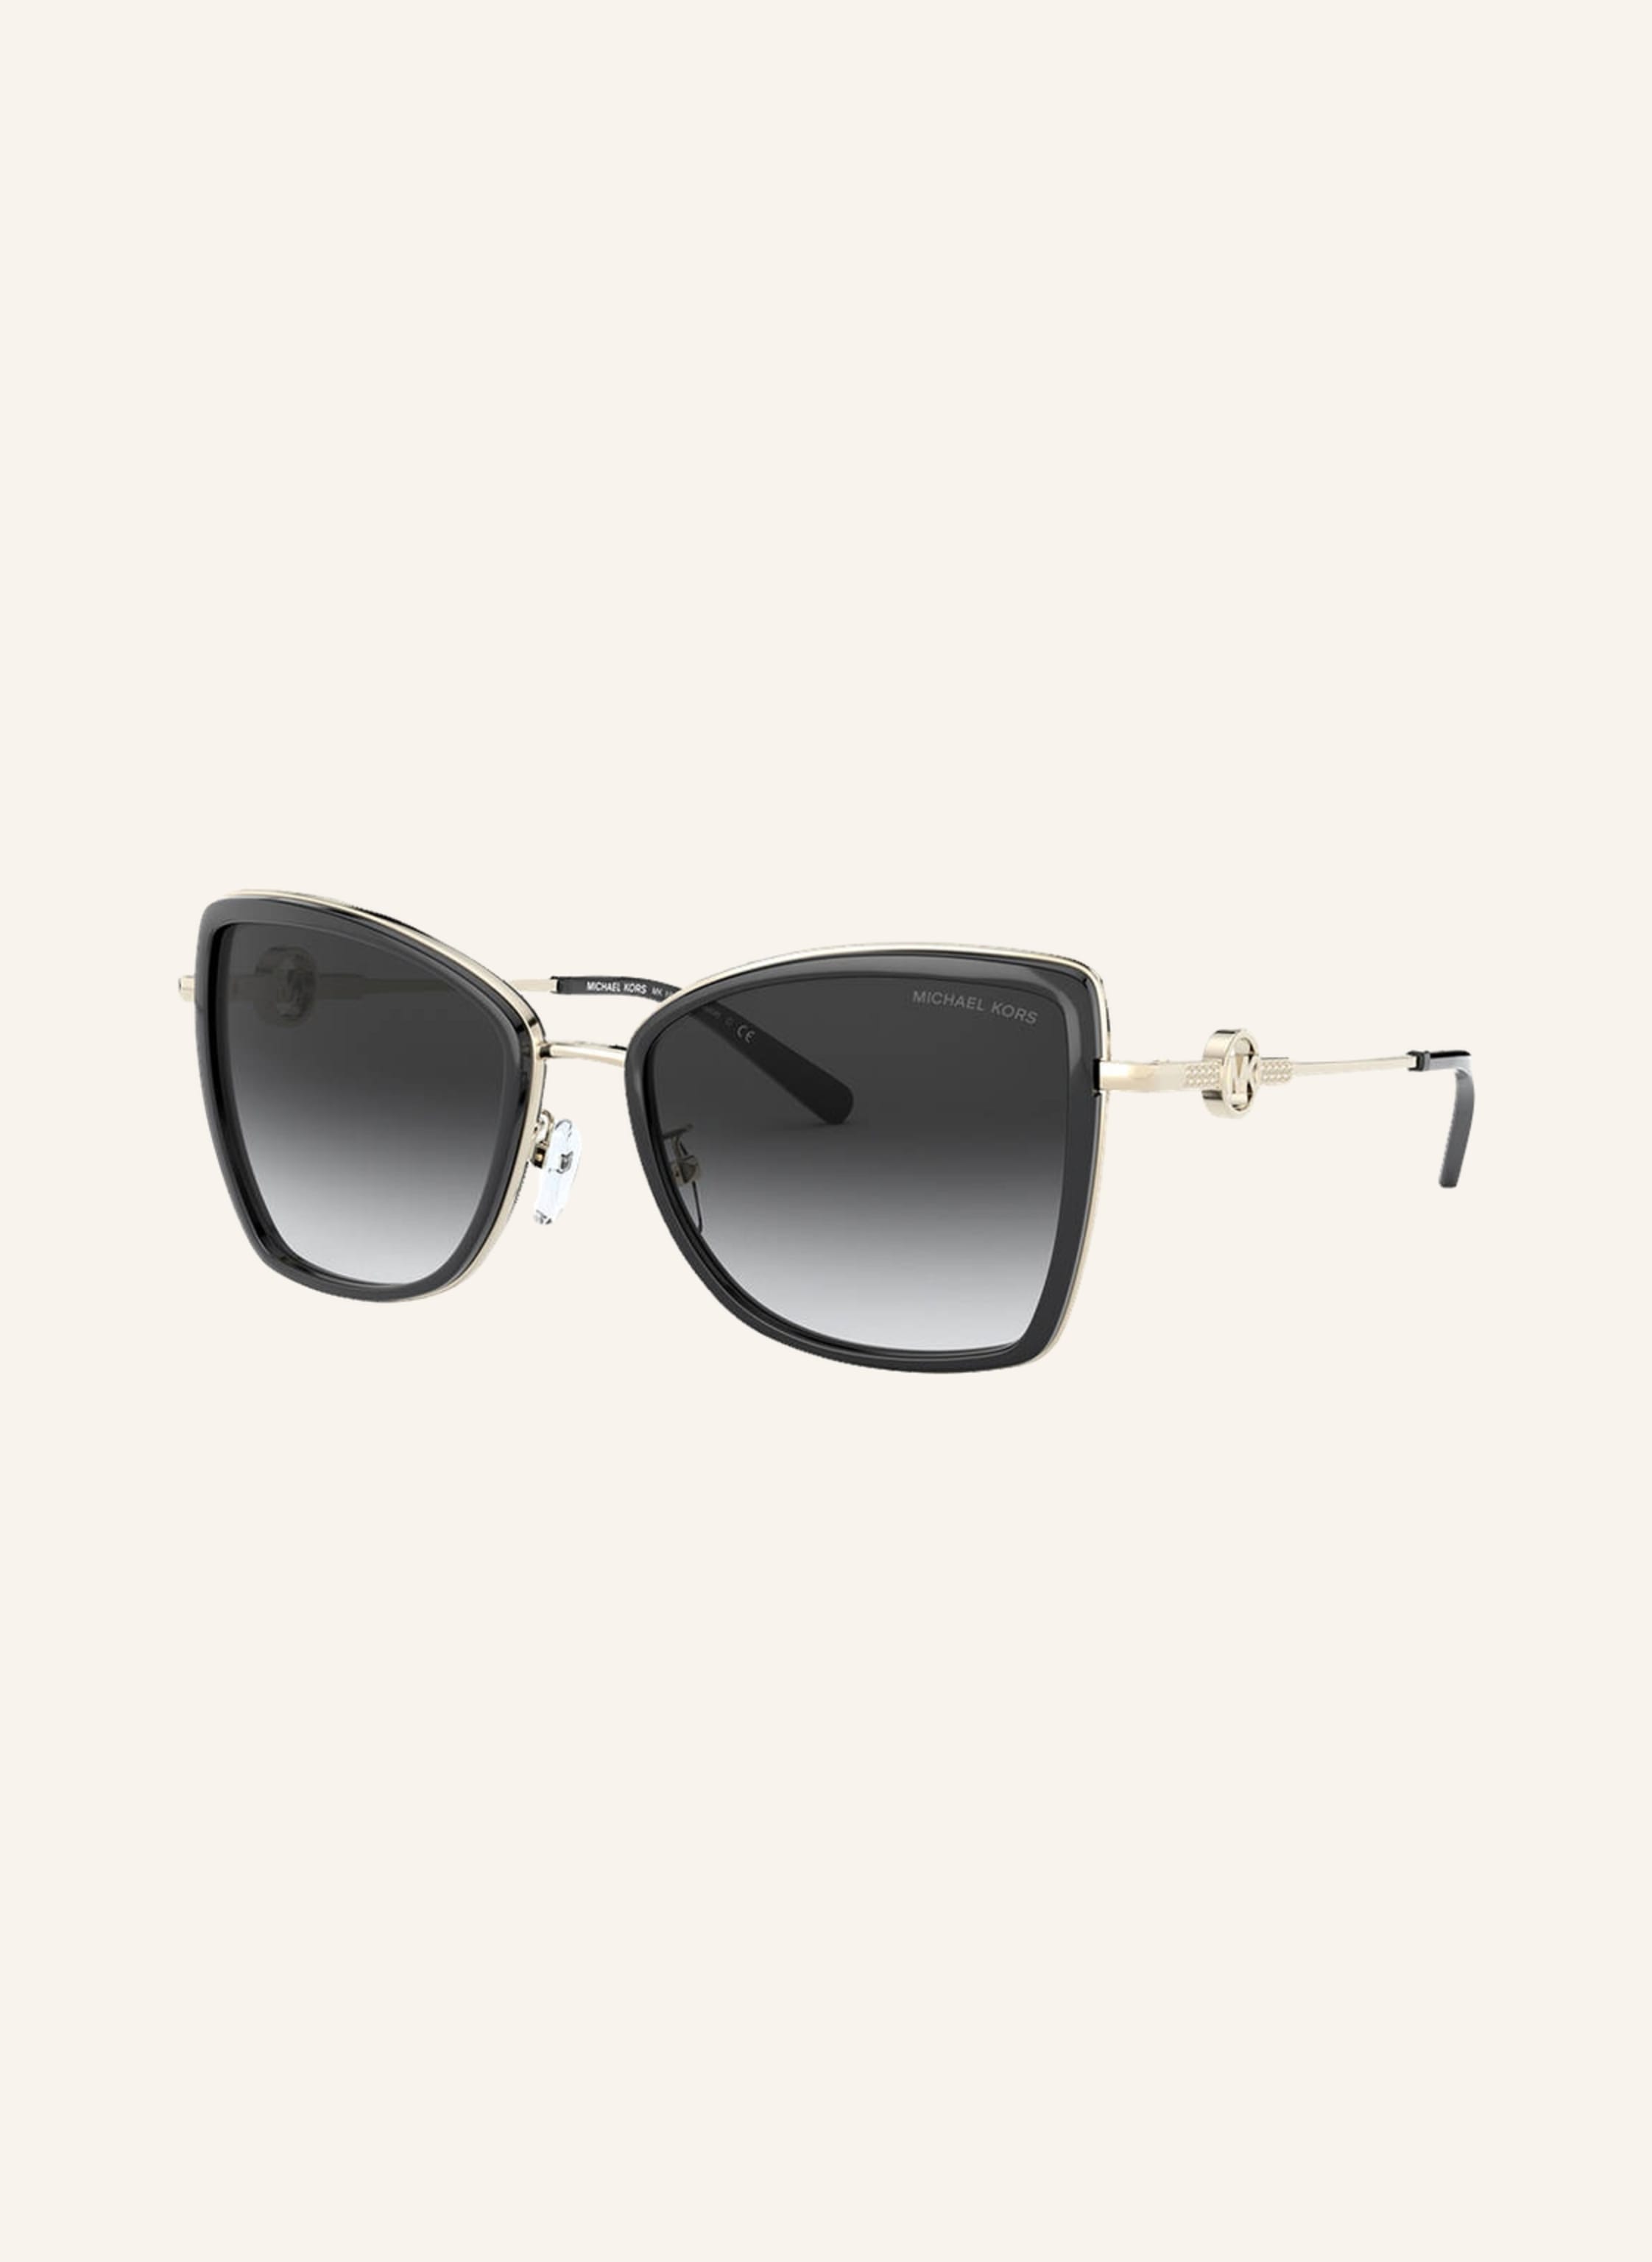 Michael Kors Light GoldBlack Metal Sunglasses  iCuracaocom